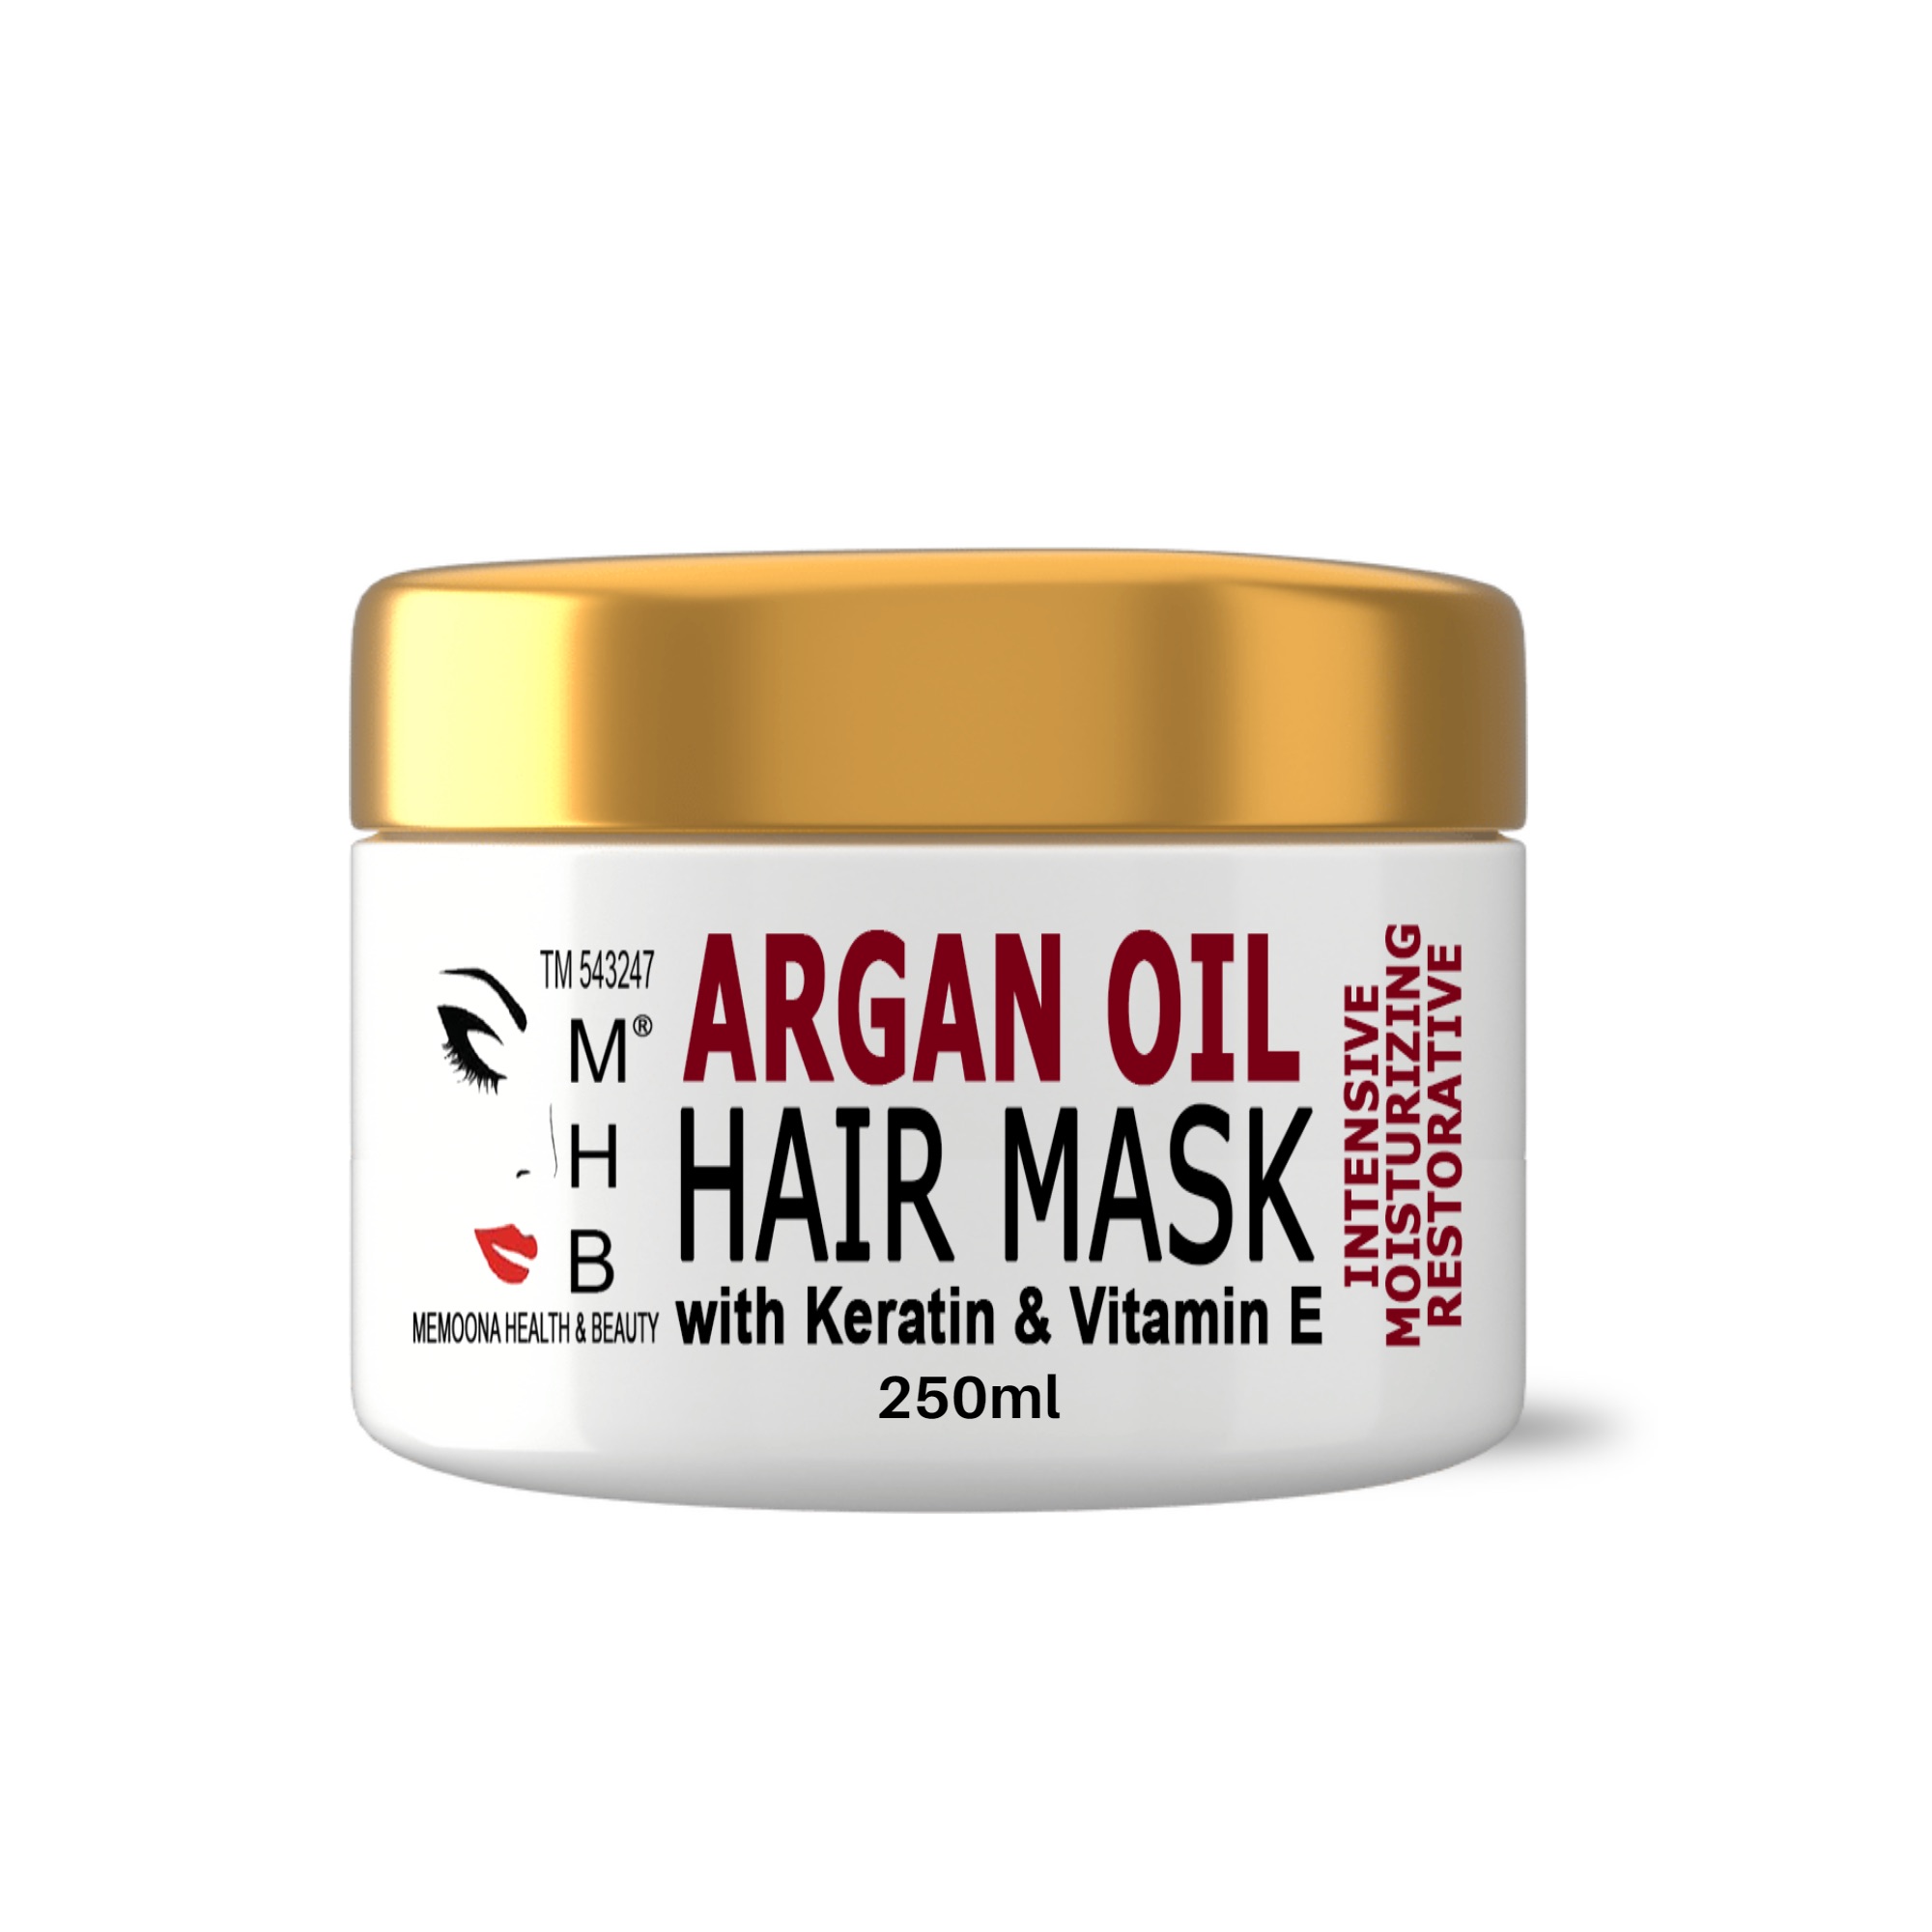 Mhb Argan Oil Hair Mask - 250ml - Deep Conditioning Keratin Hair Treatment With Vitamin E - Moisturizing And Restorative